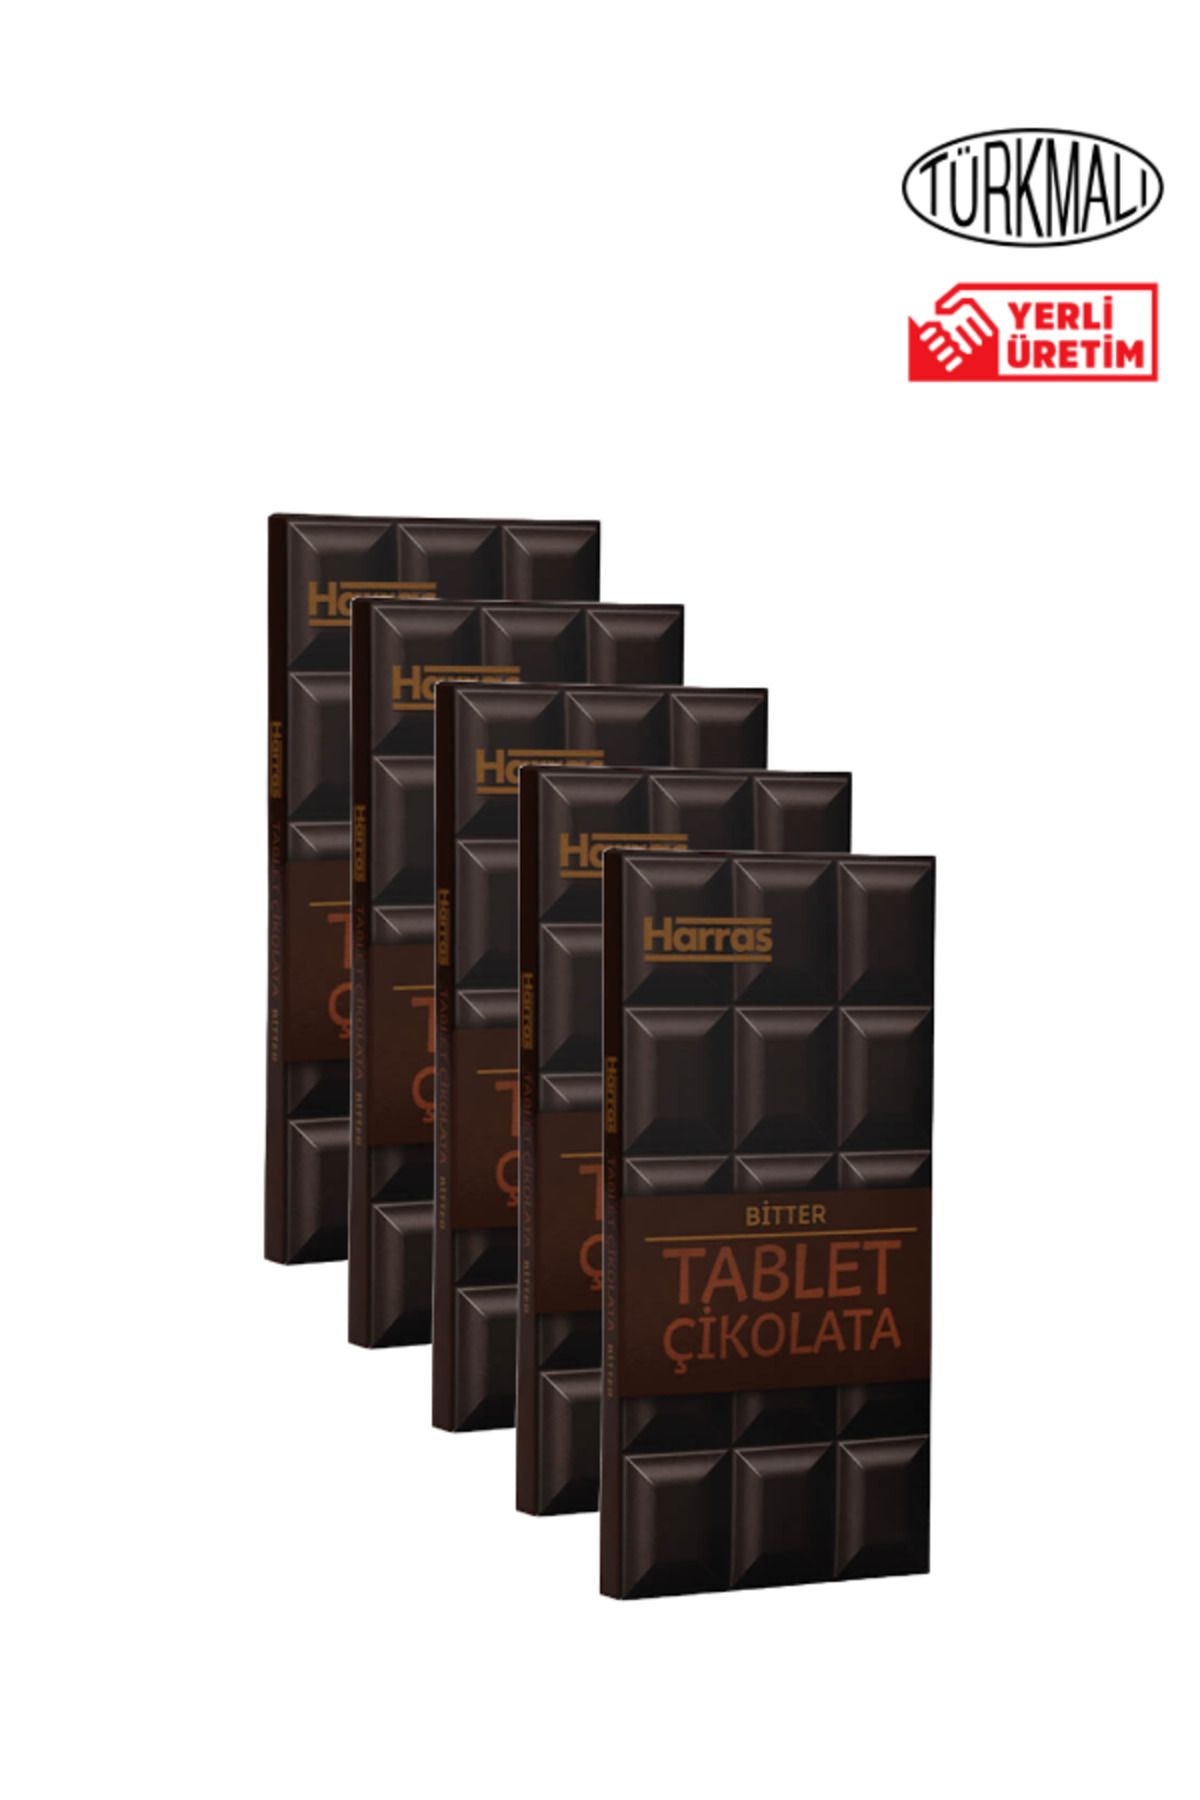 Harras Bitter Tablet Çikolata 80gr x 5 Paket